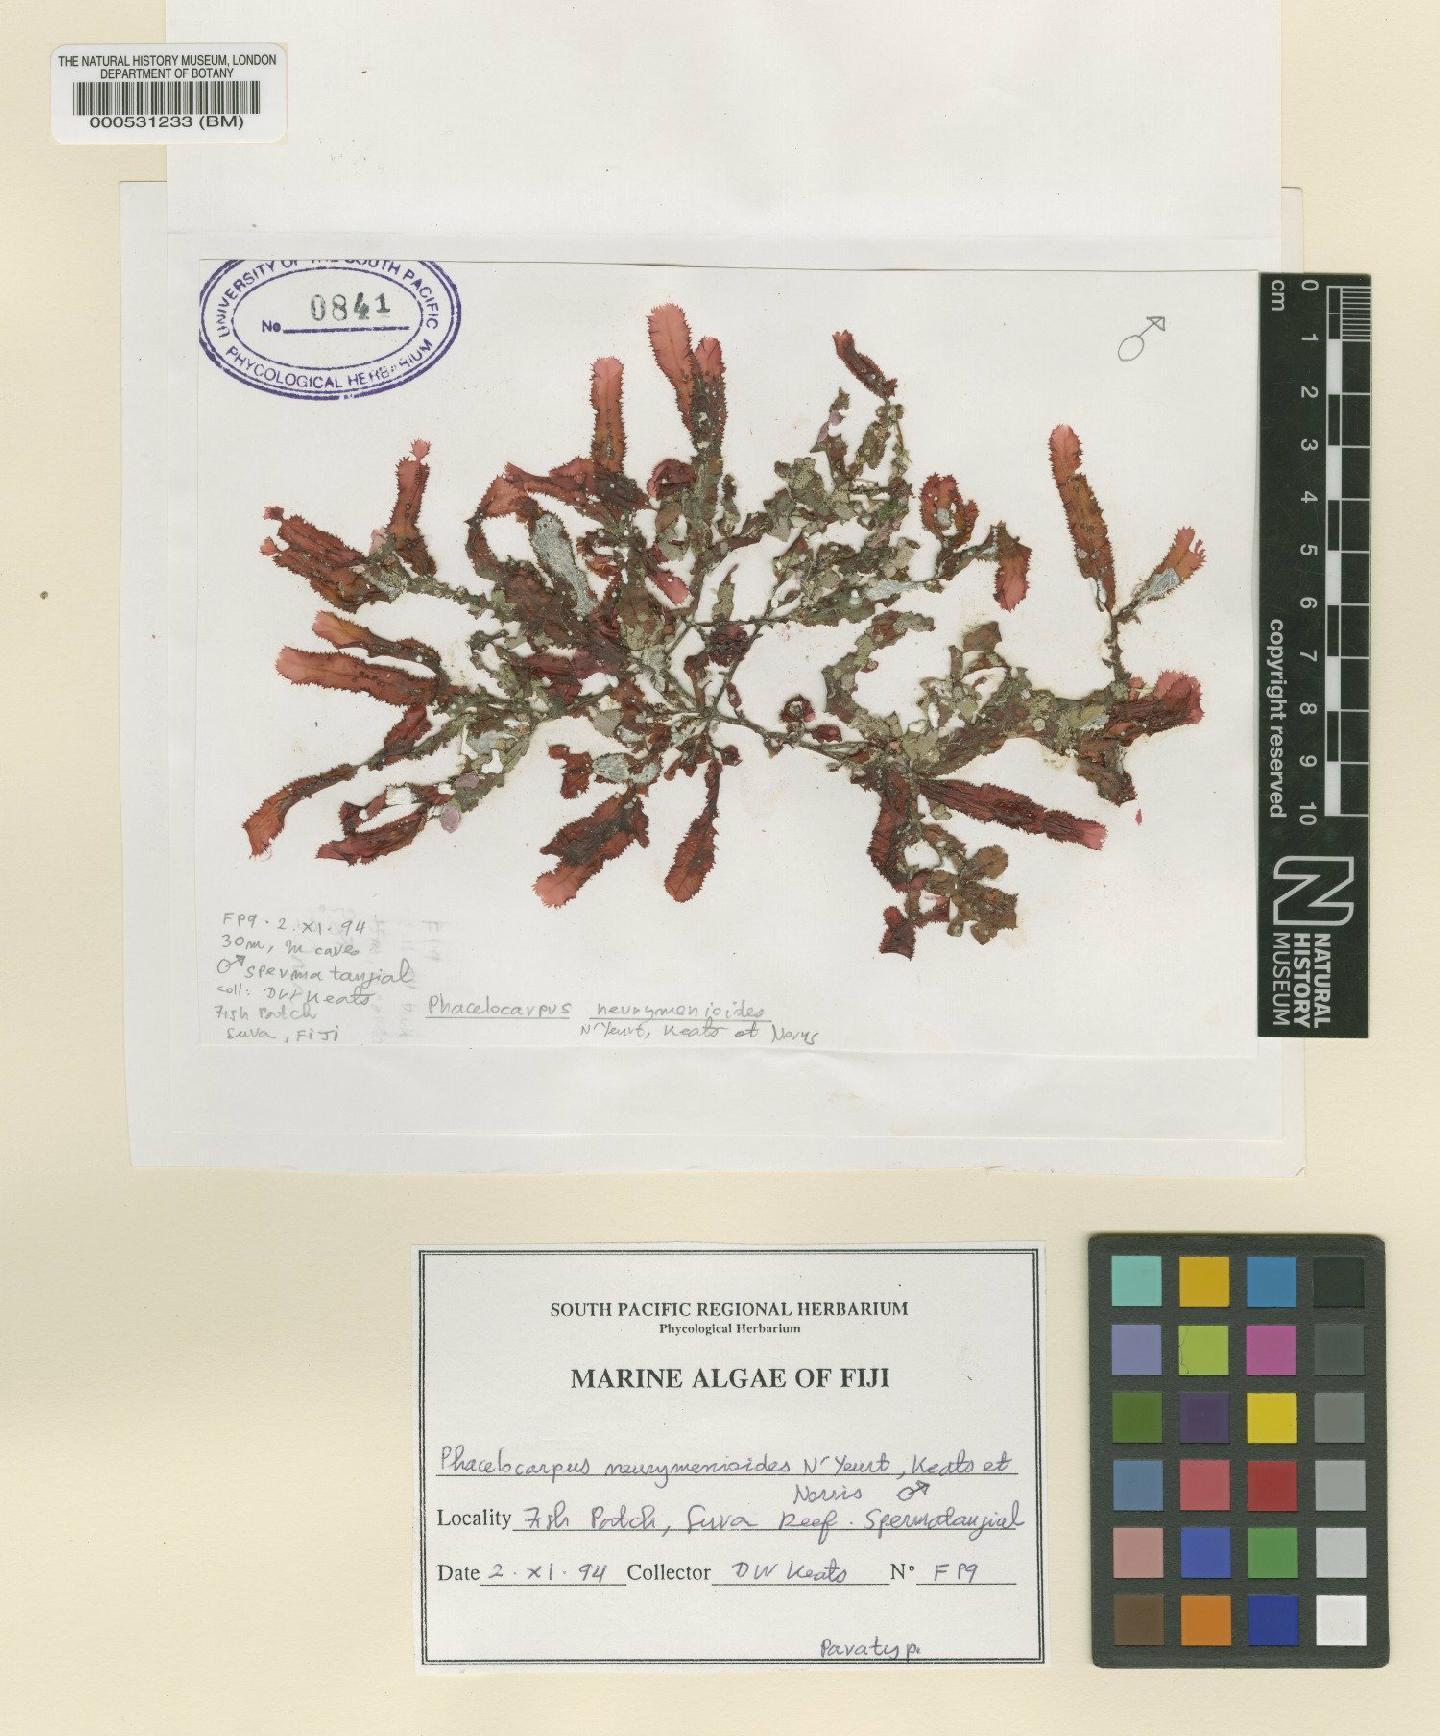 To NHMUK collection (Phacelocarpus neurymenioides N'Yeurt, Keats & R.E.Norris; Paratype; NHMUK:ecatalogue:2288548)